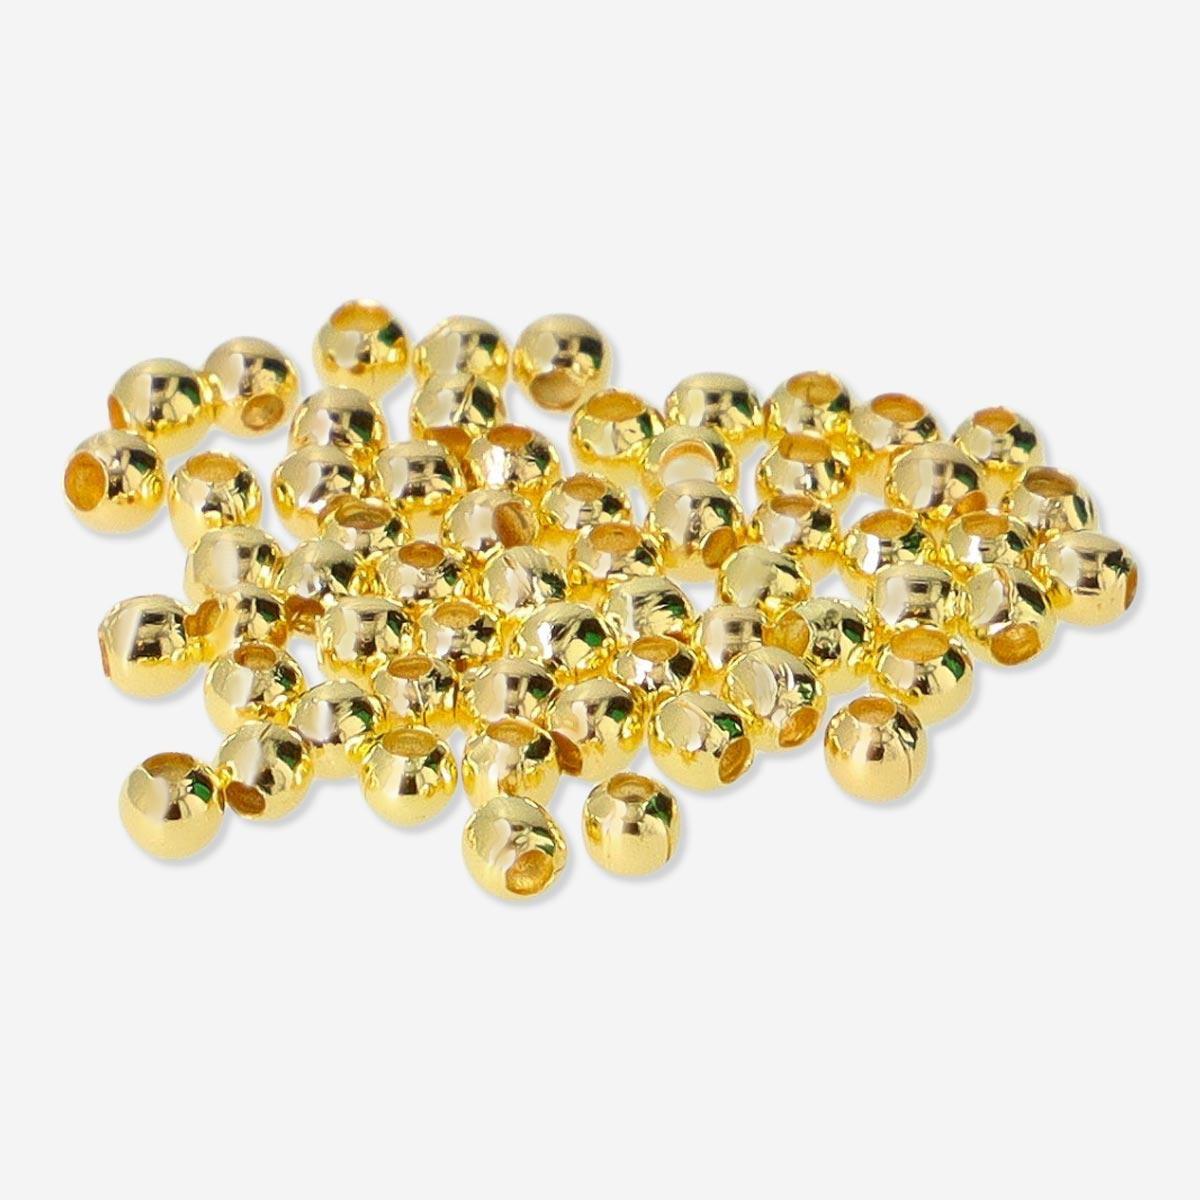 Gold metal beads